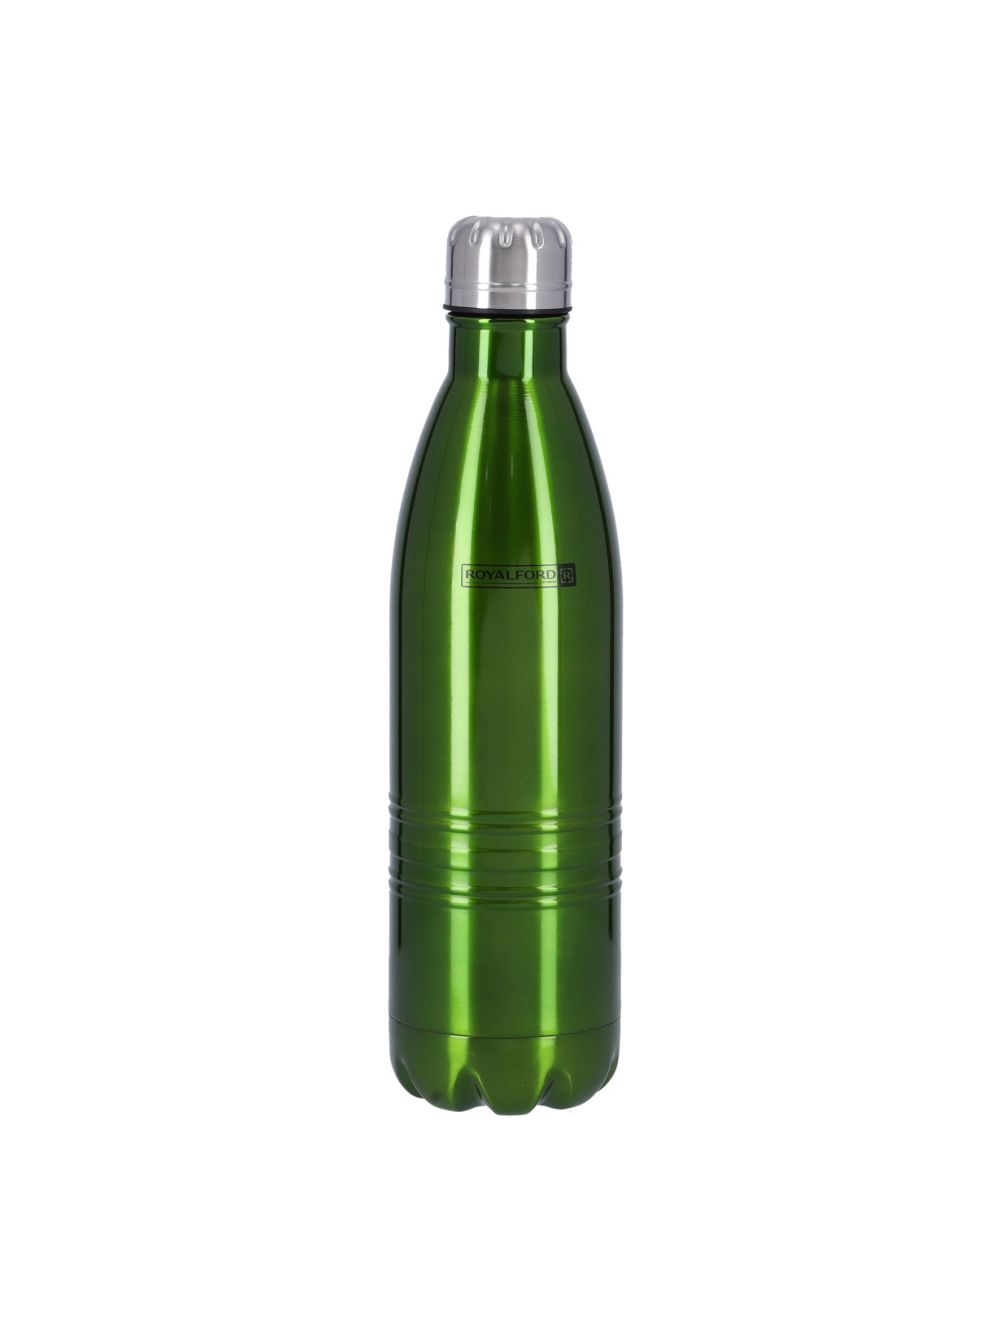 Royalford 500ml Vacuum Bottle